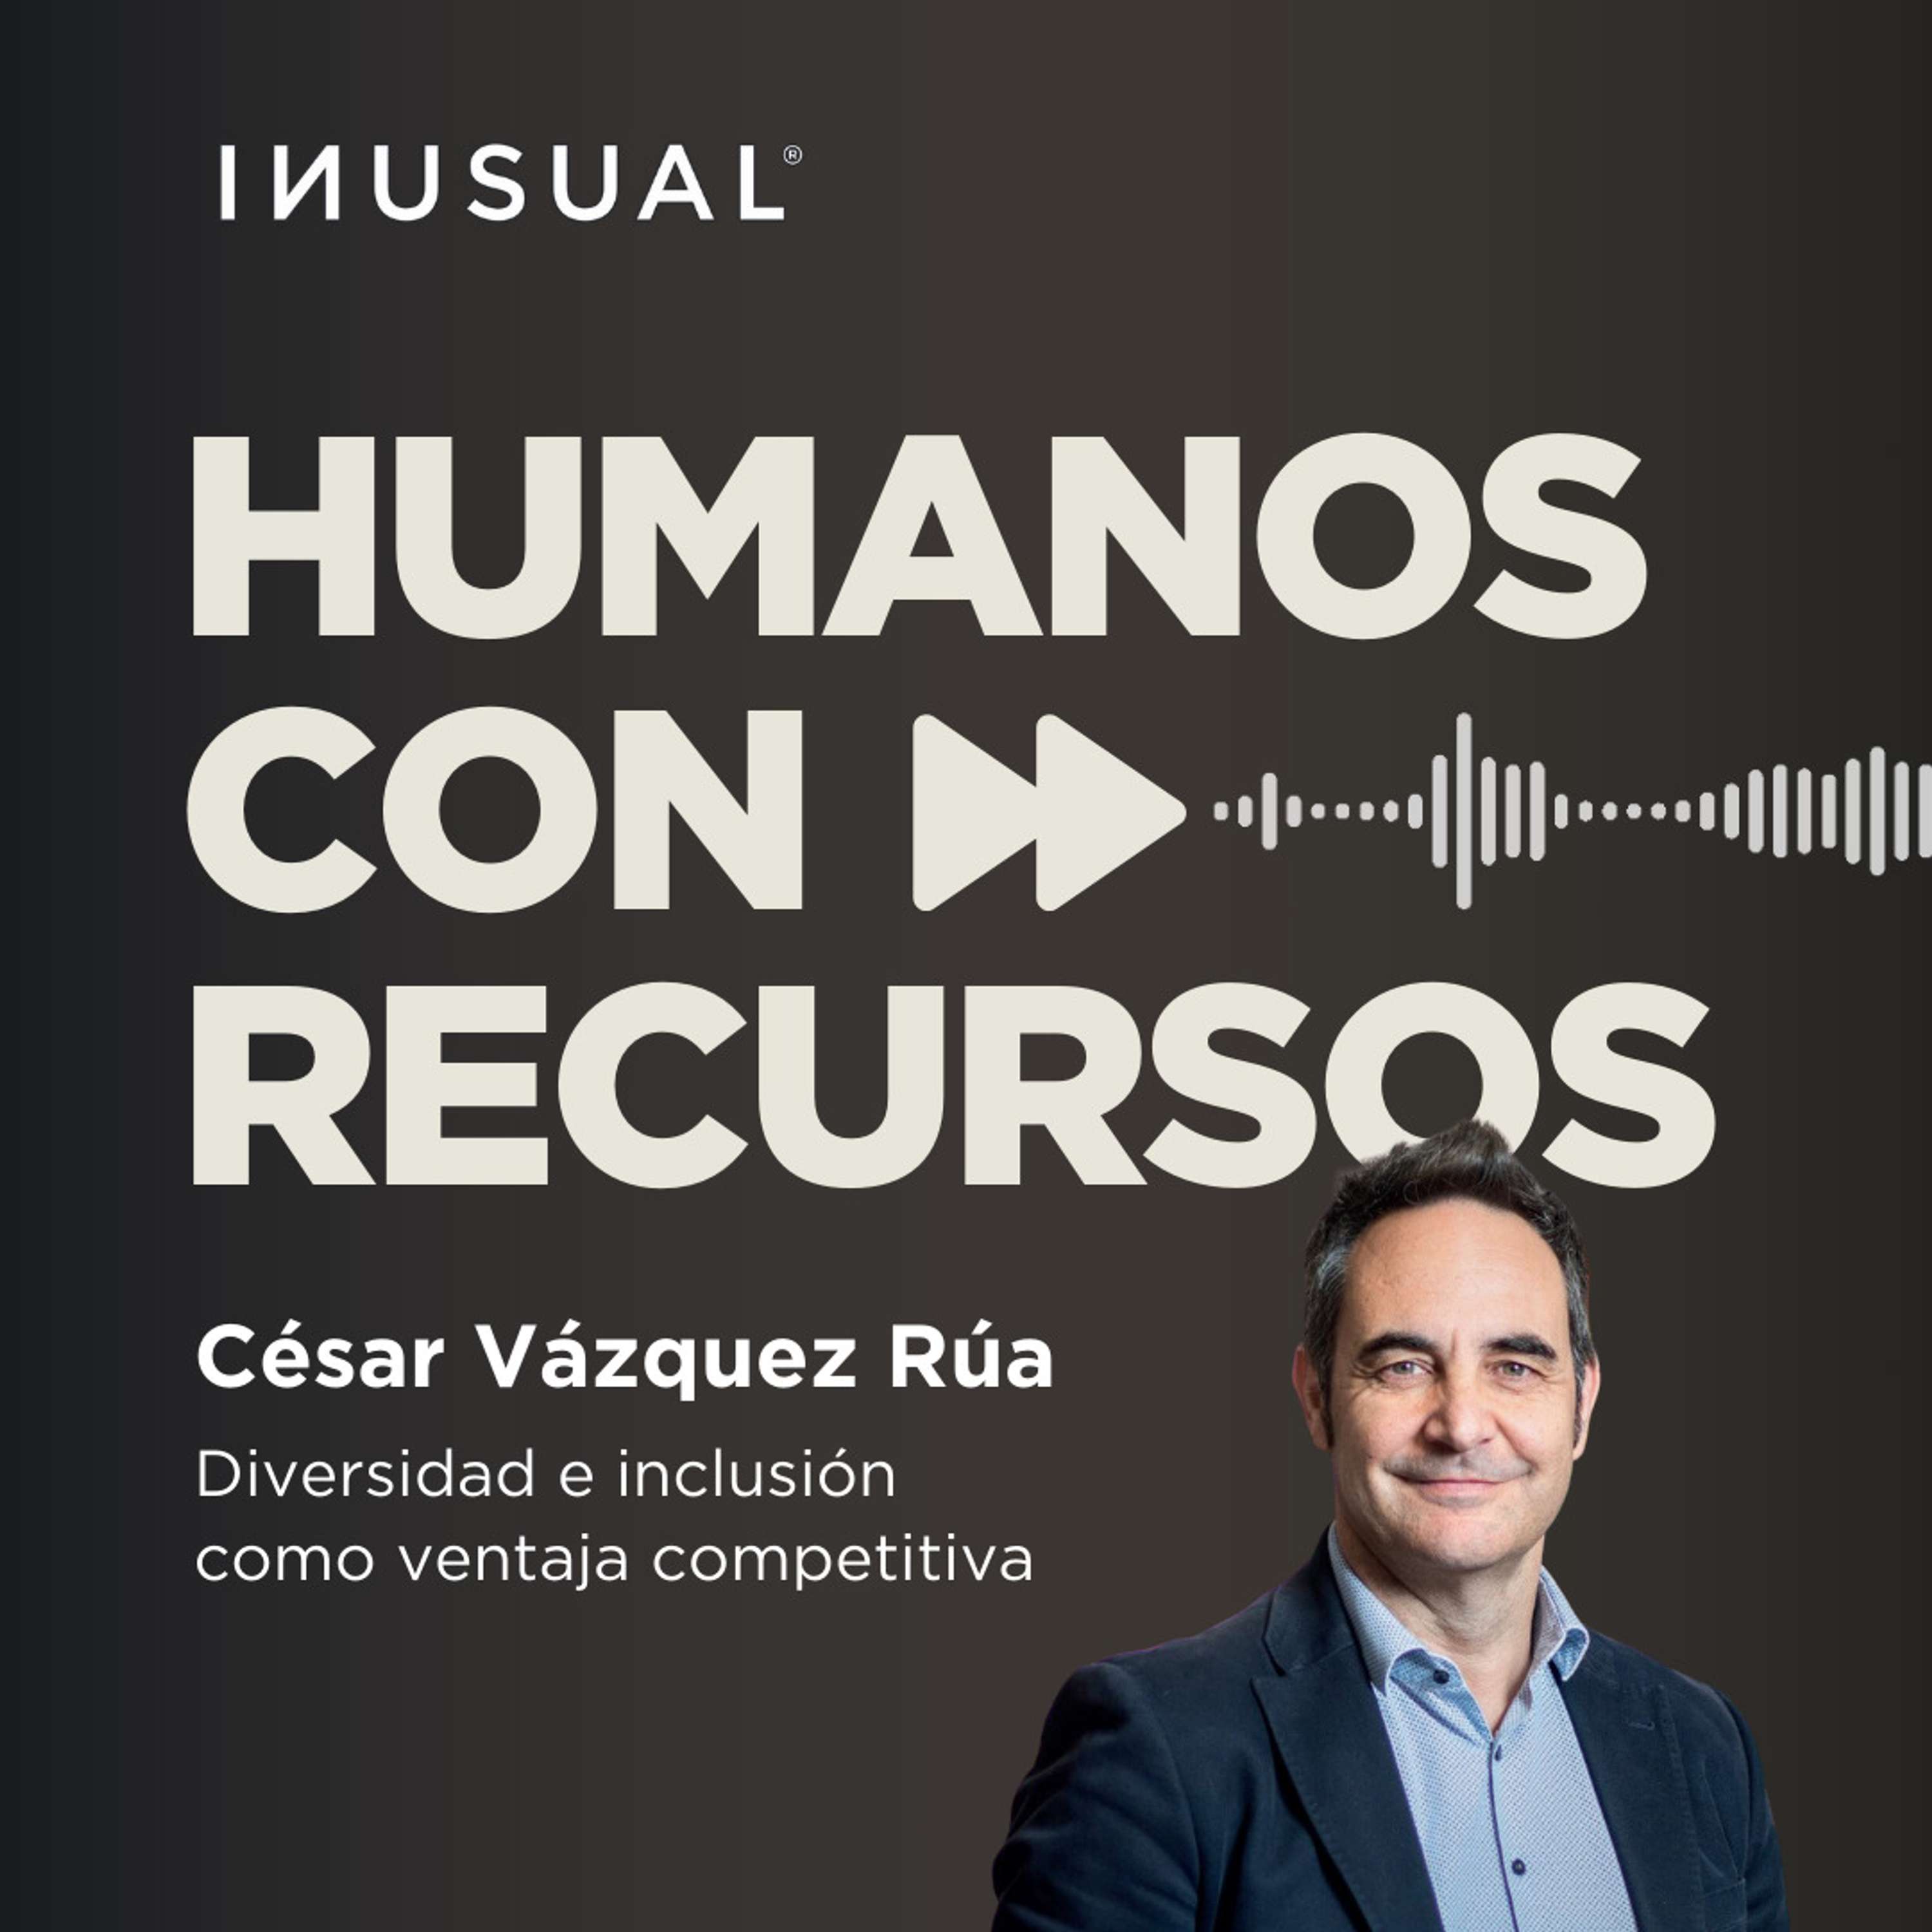 Diversidad e inclusión como ventaja competitiva, con César Vázquez Rúa